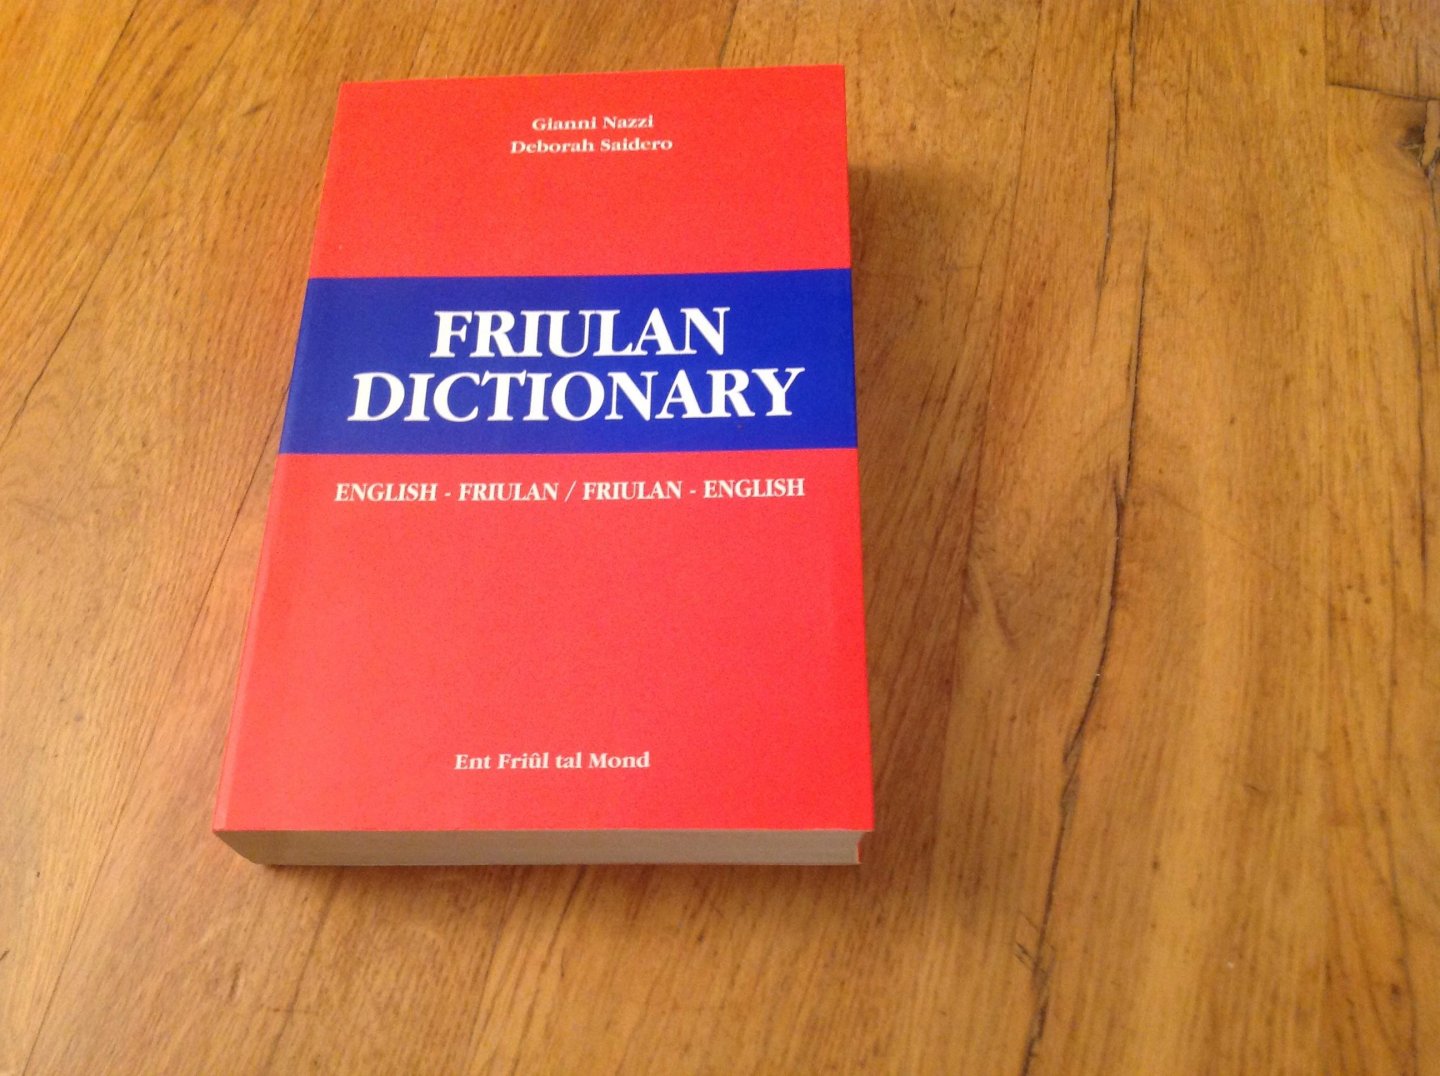 Gianni Nazzi / Deborah Saidero - Friulan Dictionary English-Friulan / Friulan-English